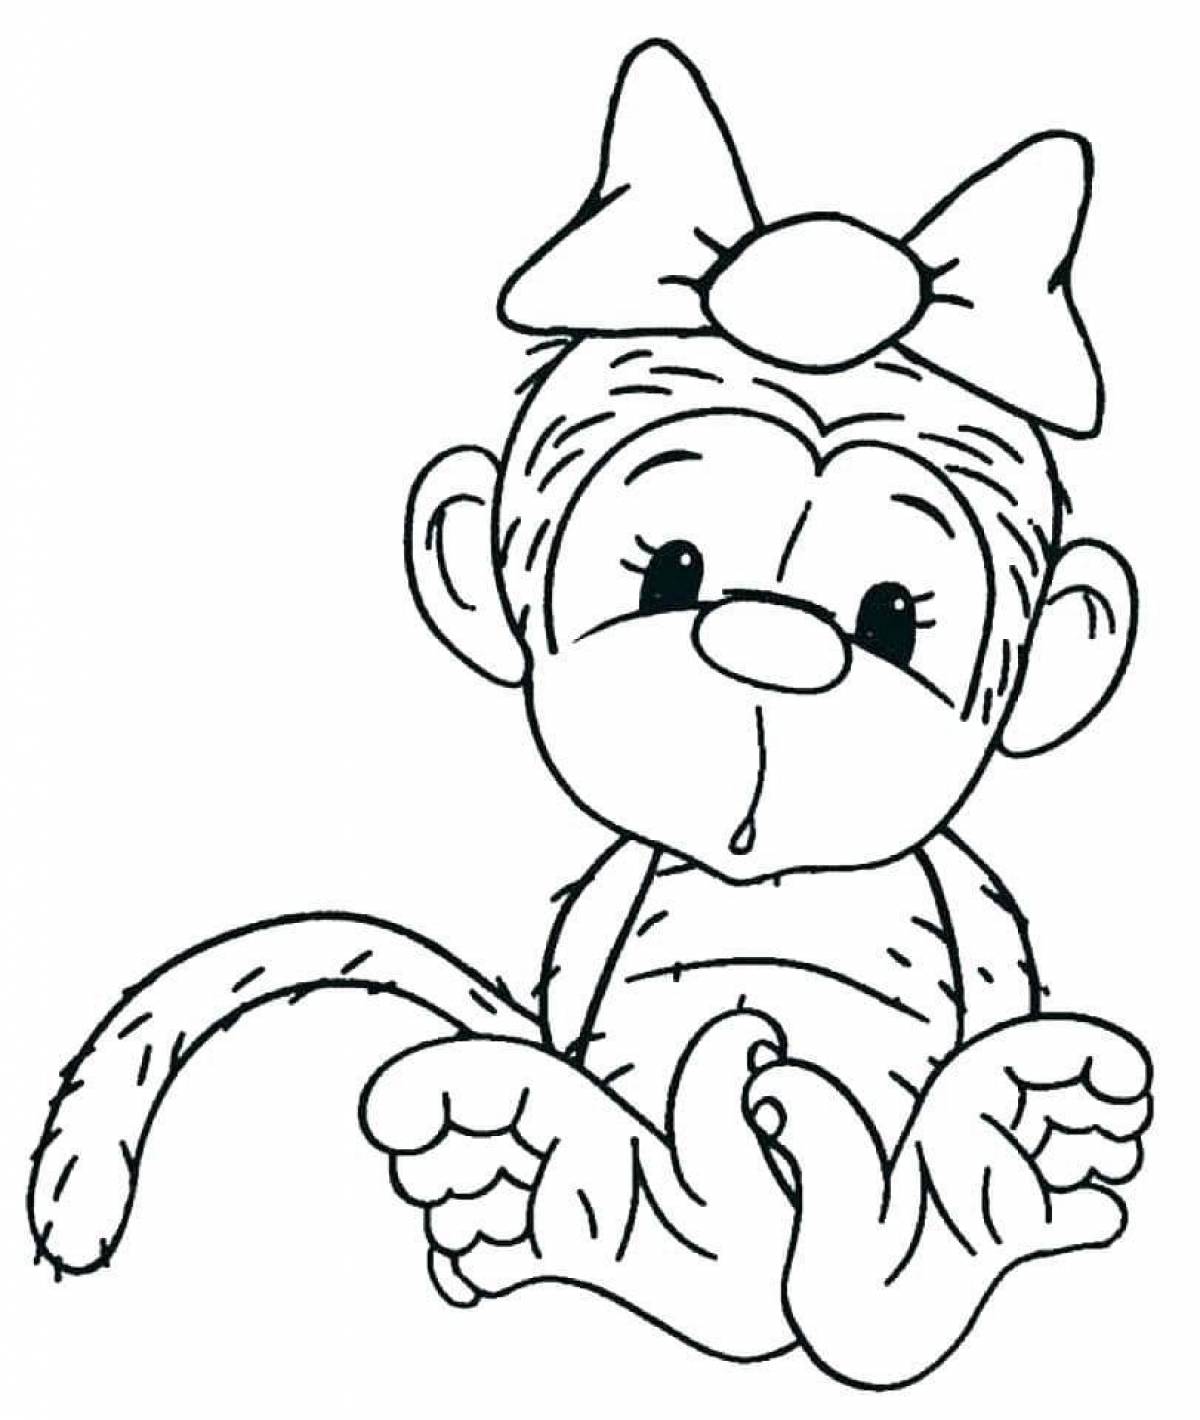 Friendly monkey coloring book